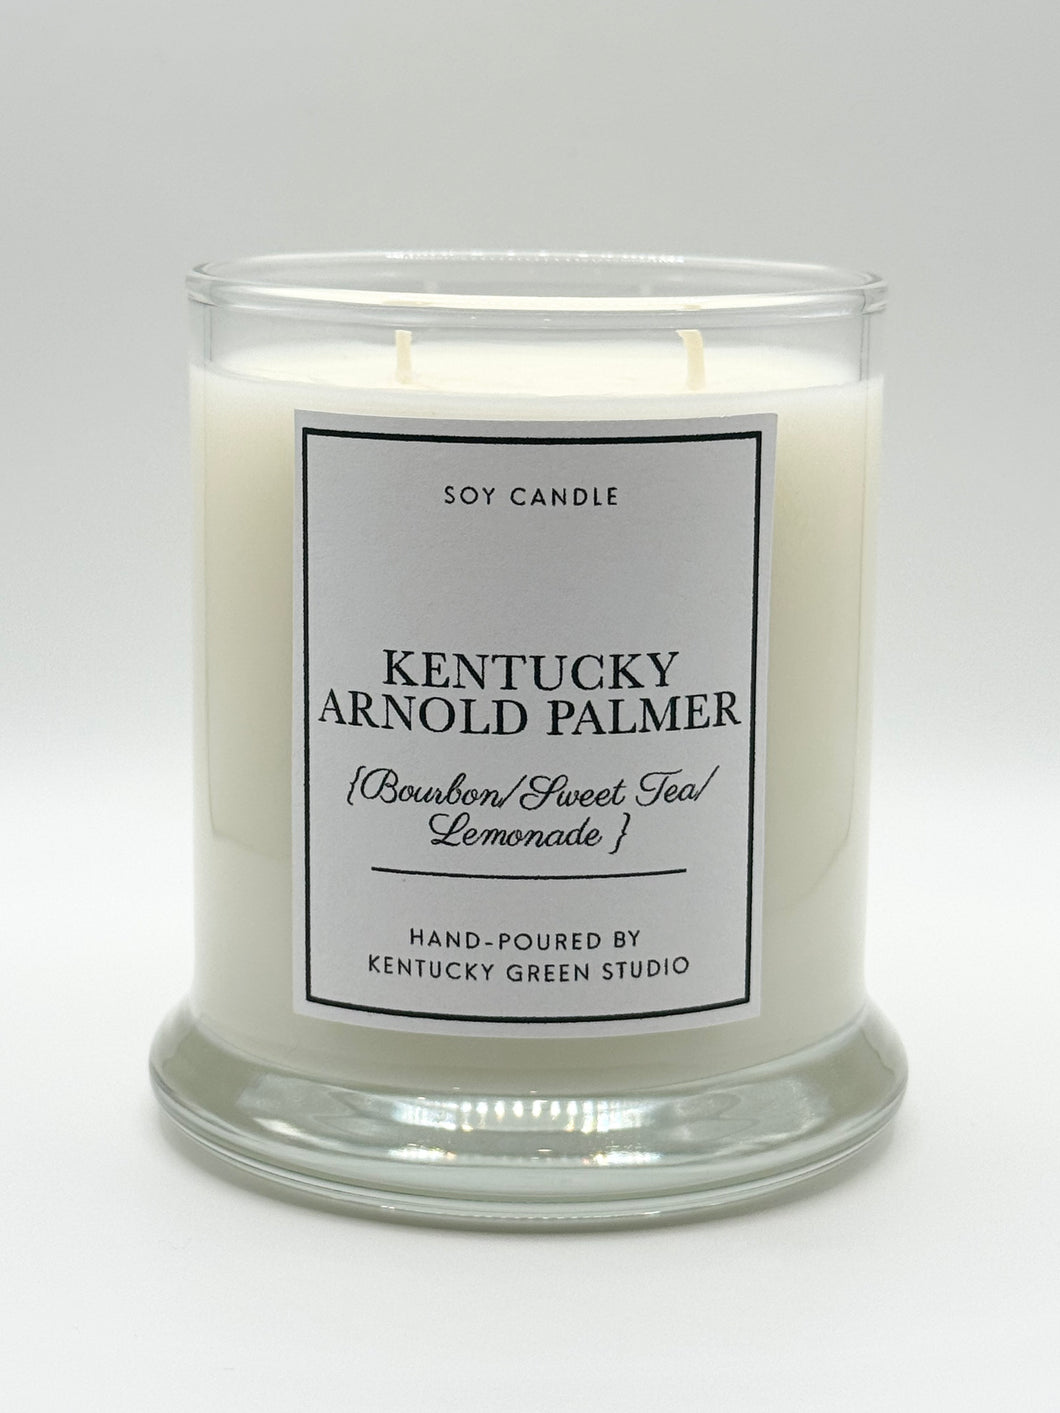 Kentucky Arnold Palmer Soy Candle